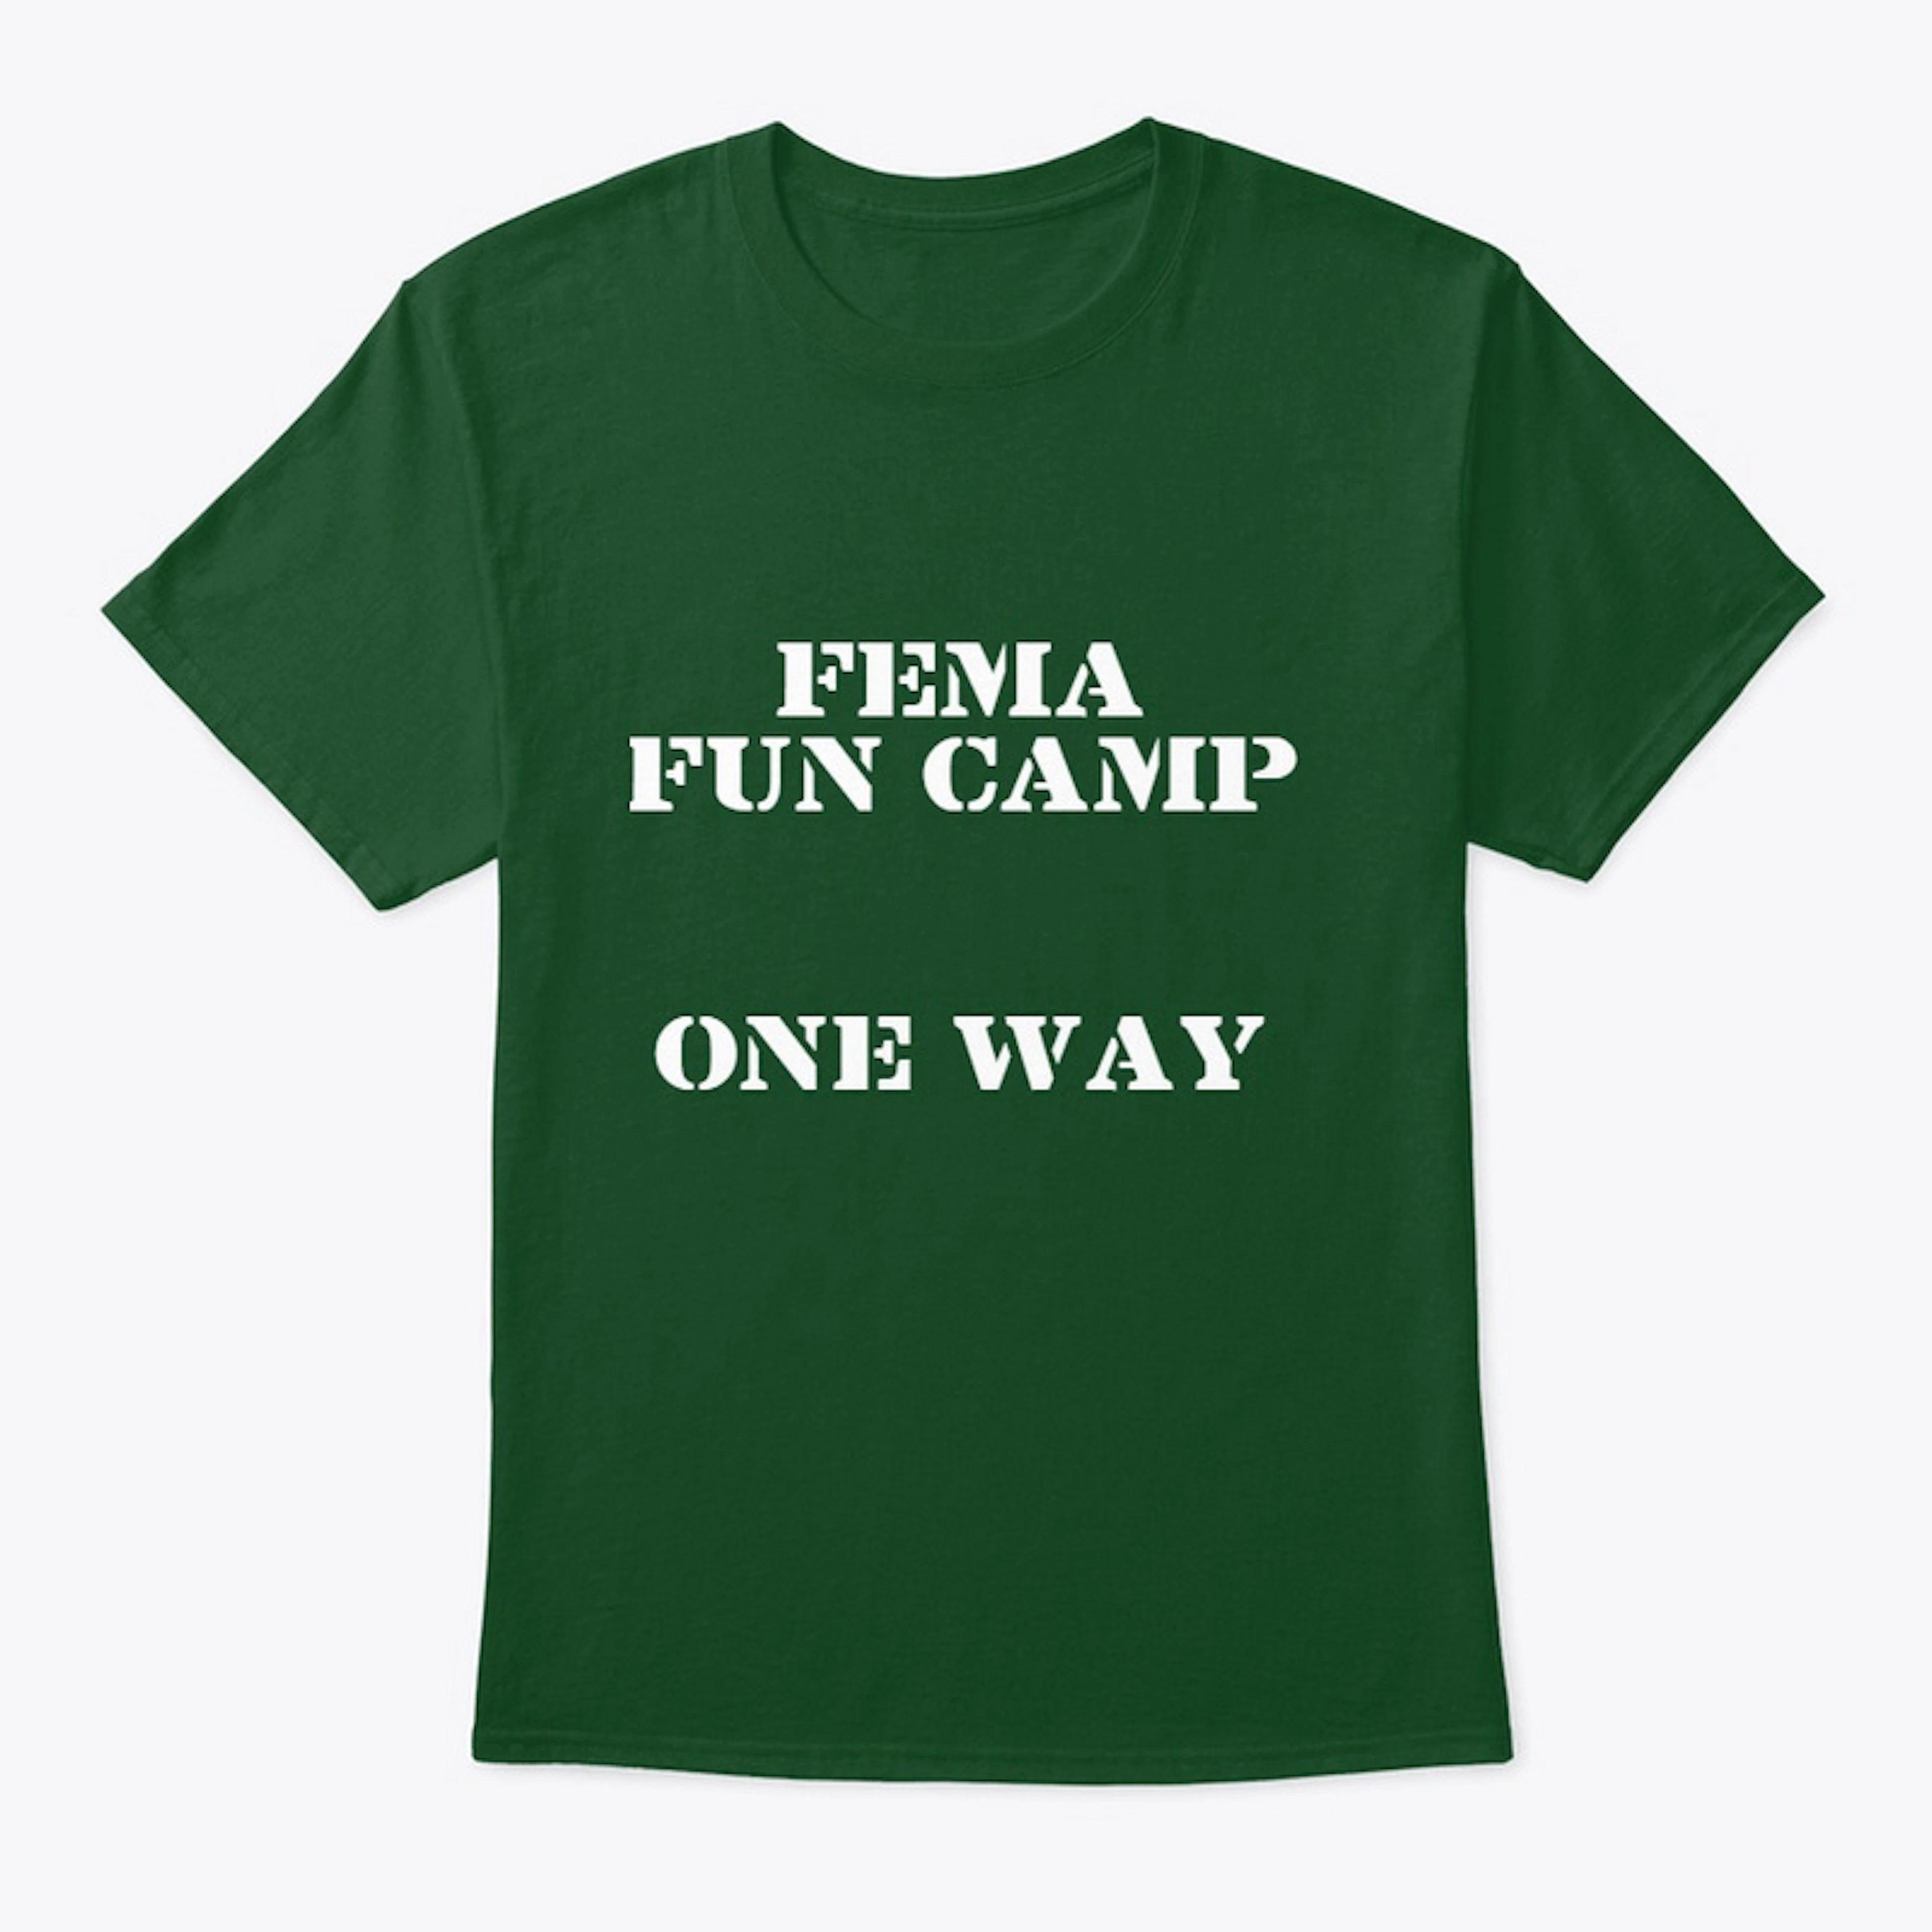 FEMA Fun Camp shirt